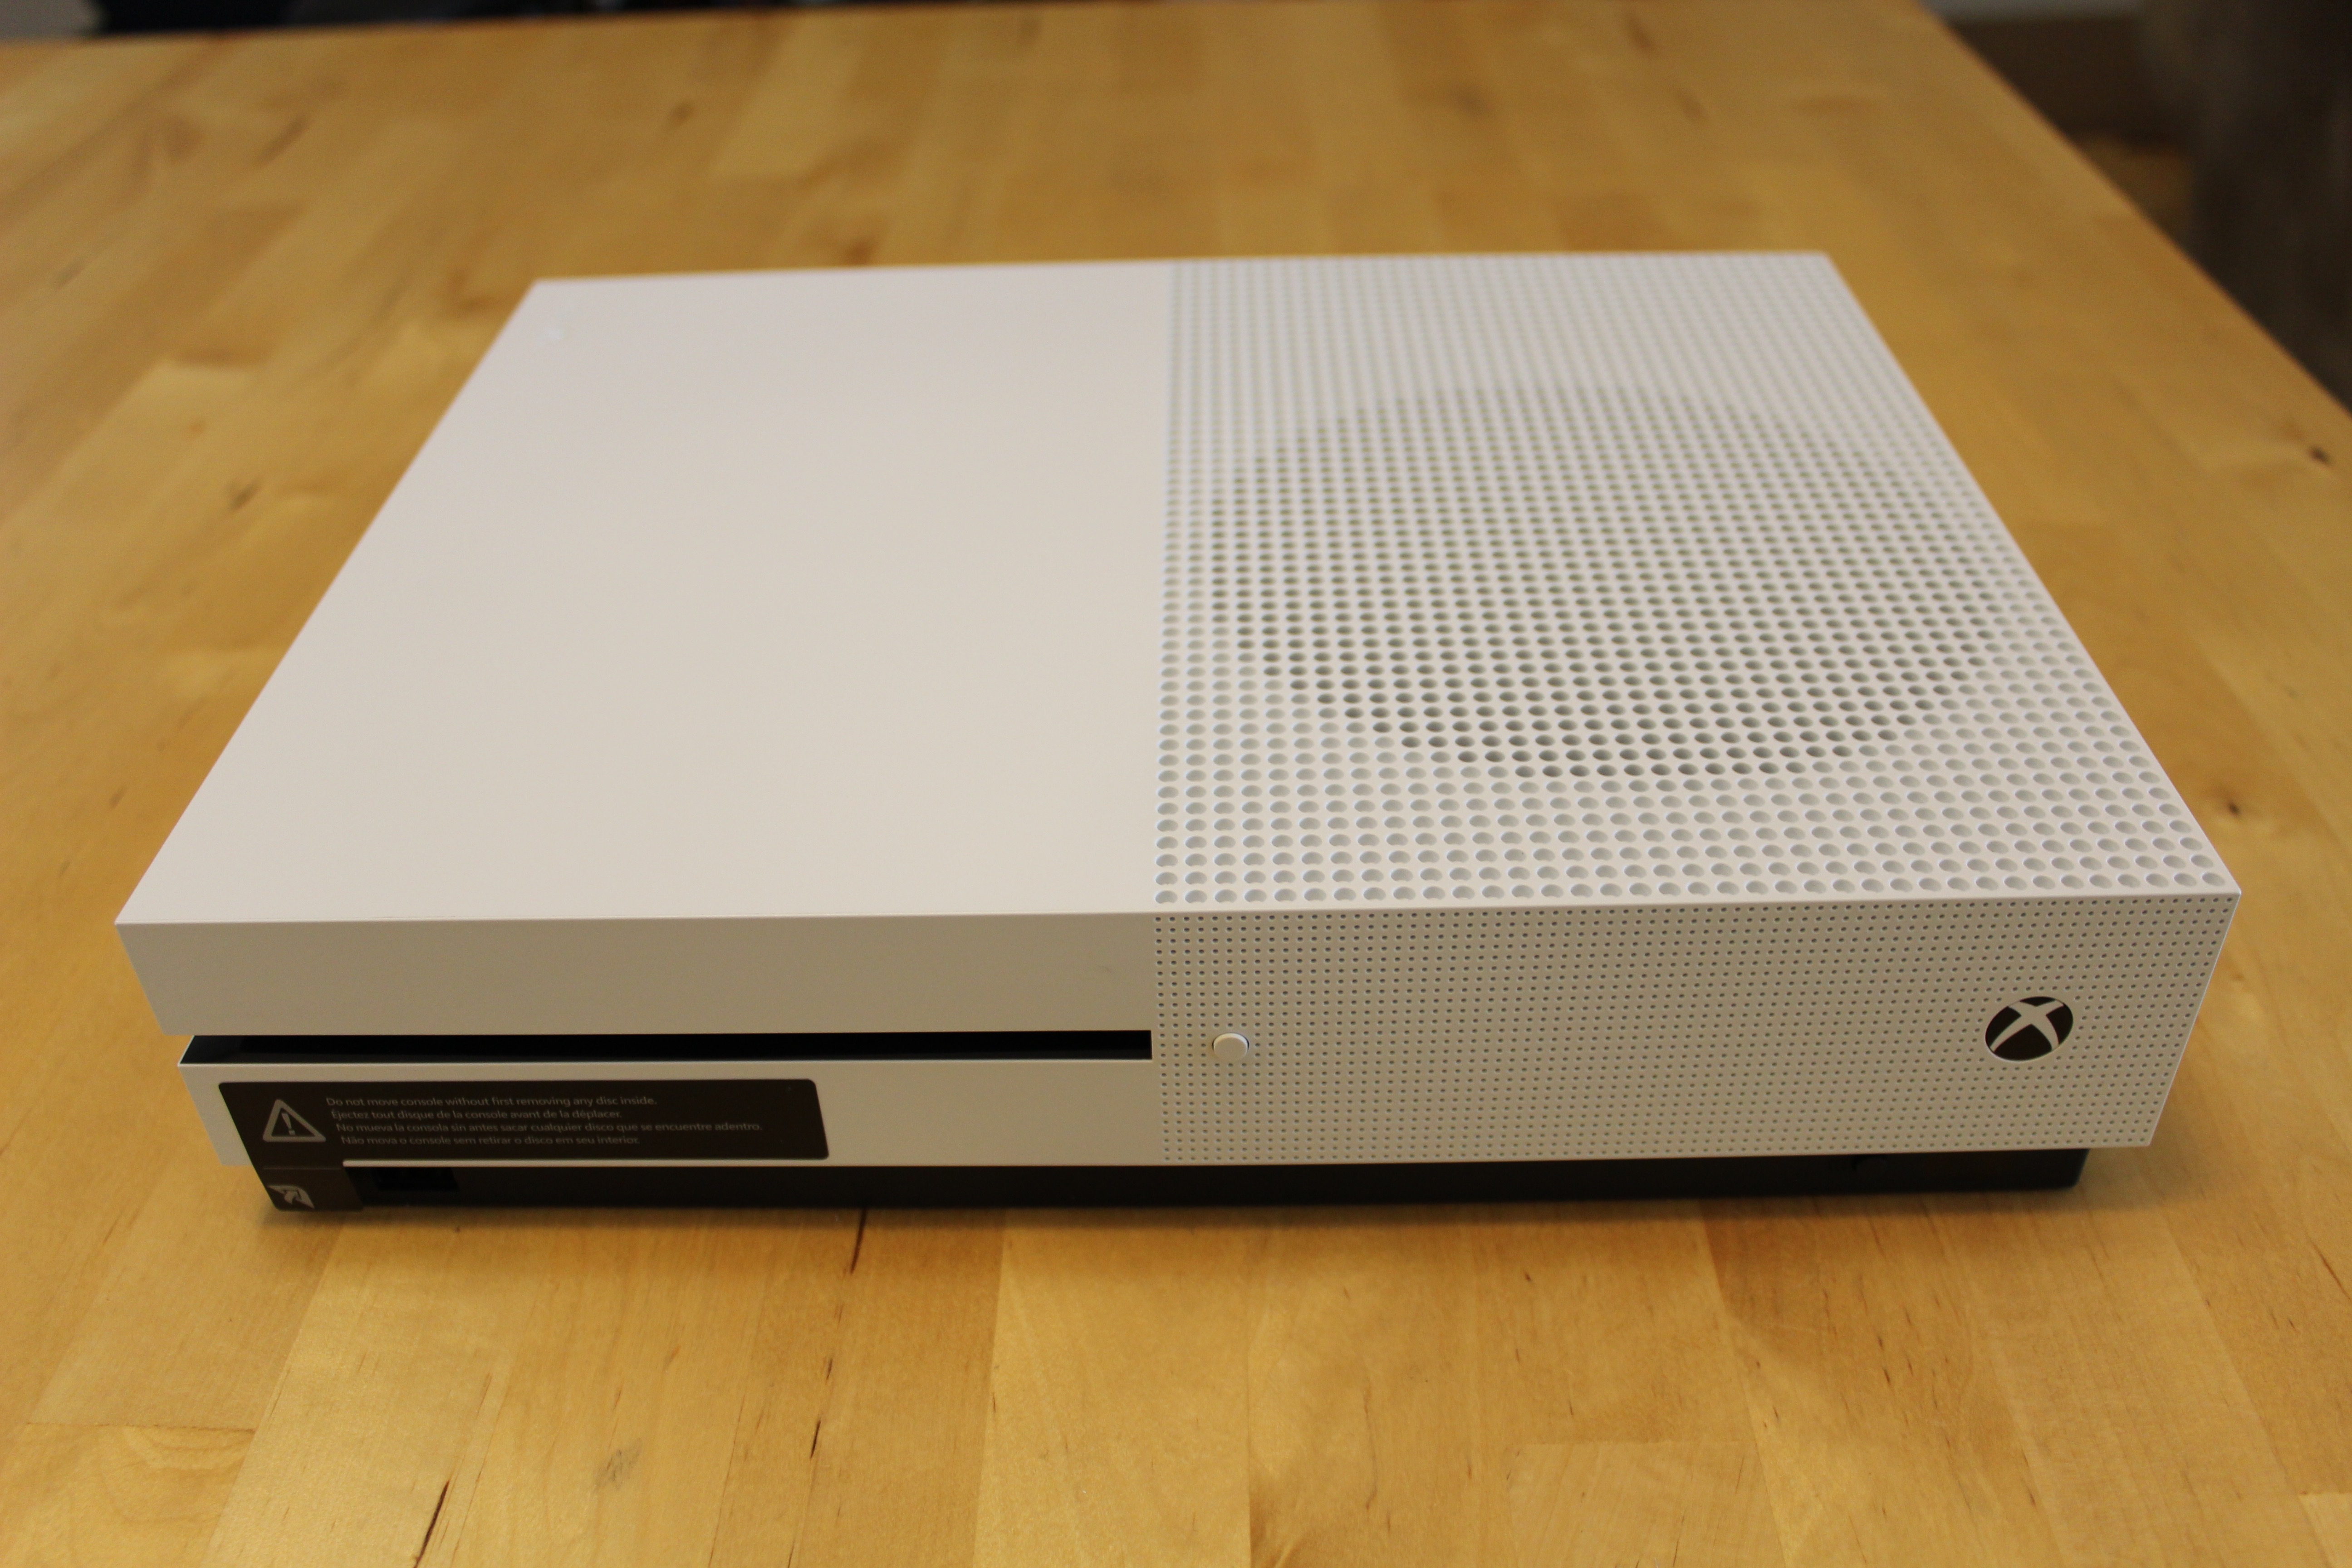 Xbox One S: The smaller, handsomer, 4K-ier system we've been